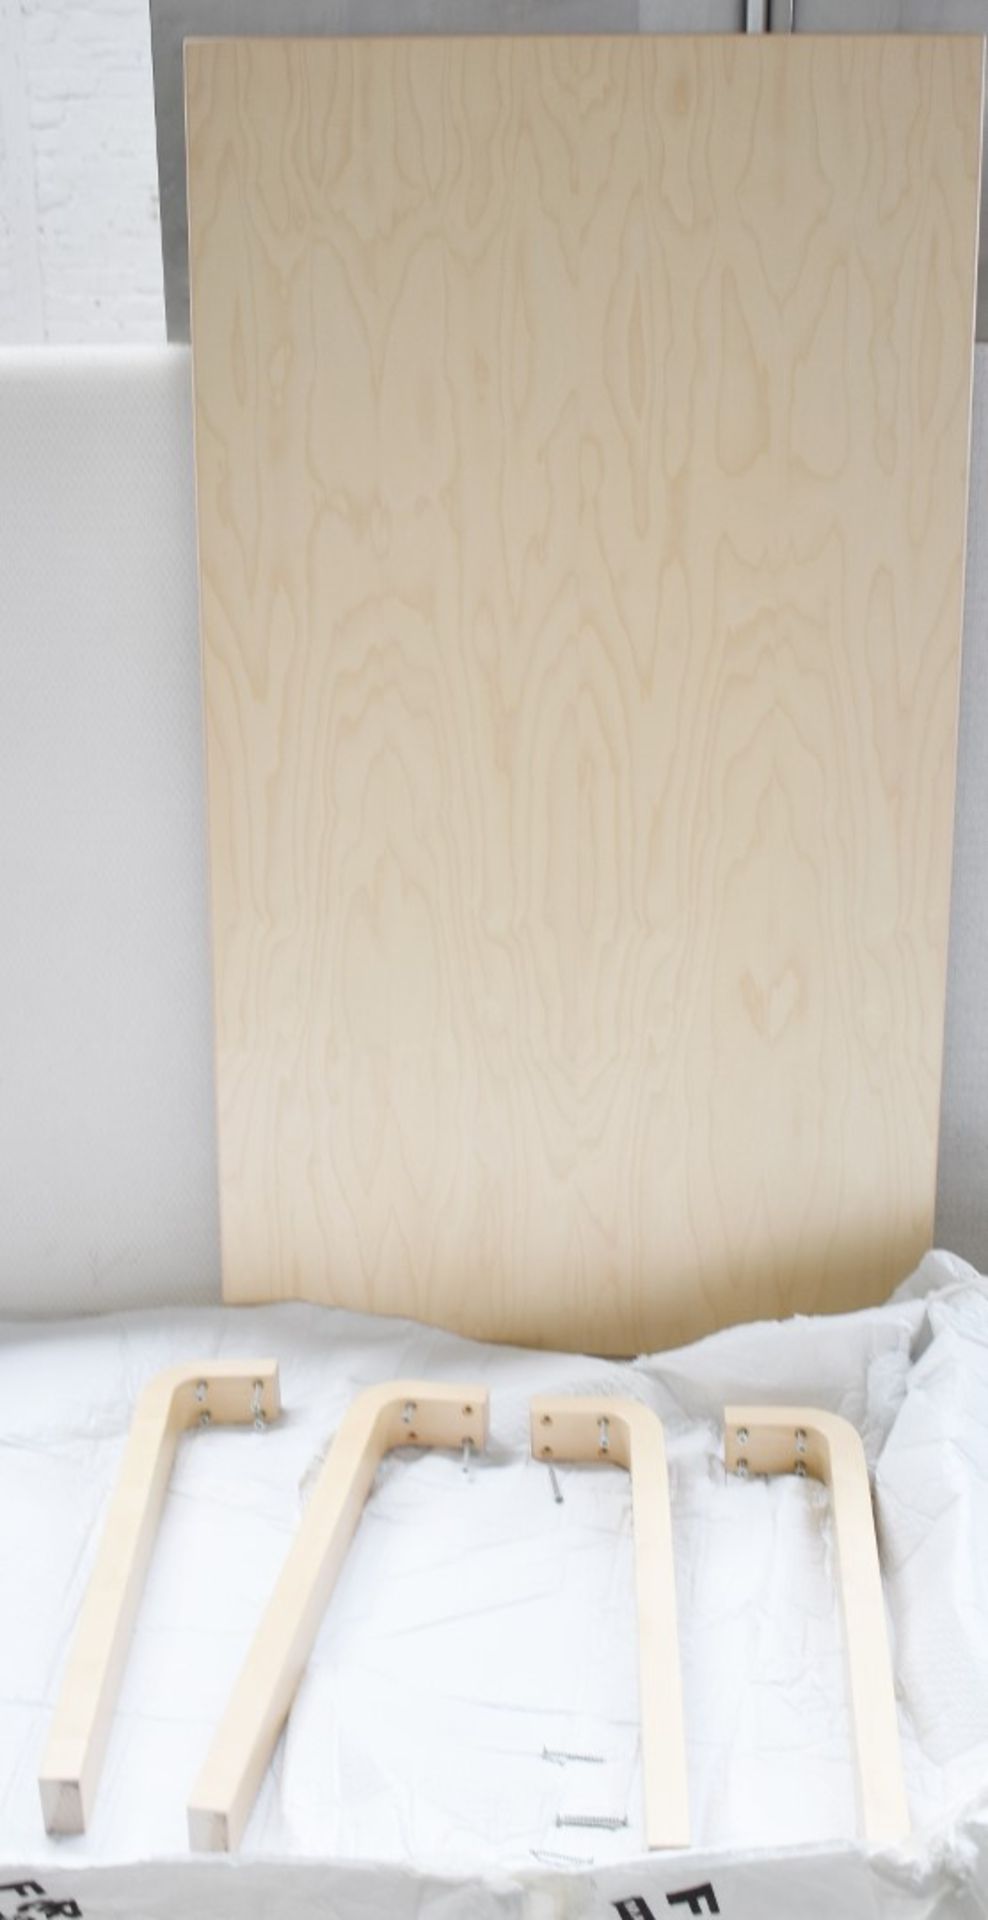 1 x VITRA / ARTEK 'Aalto 82A' Designer Table, In Birch - Original Price £979.00 - Image 2 of 4